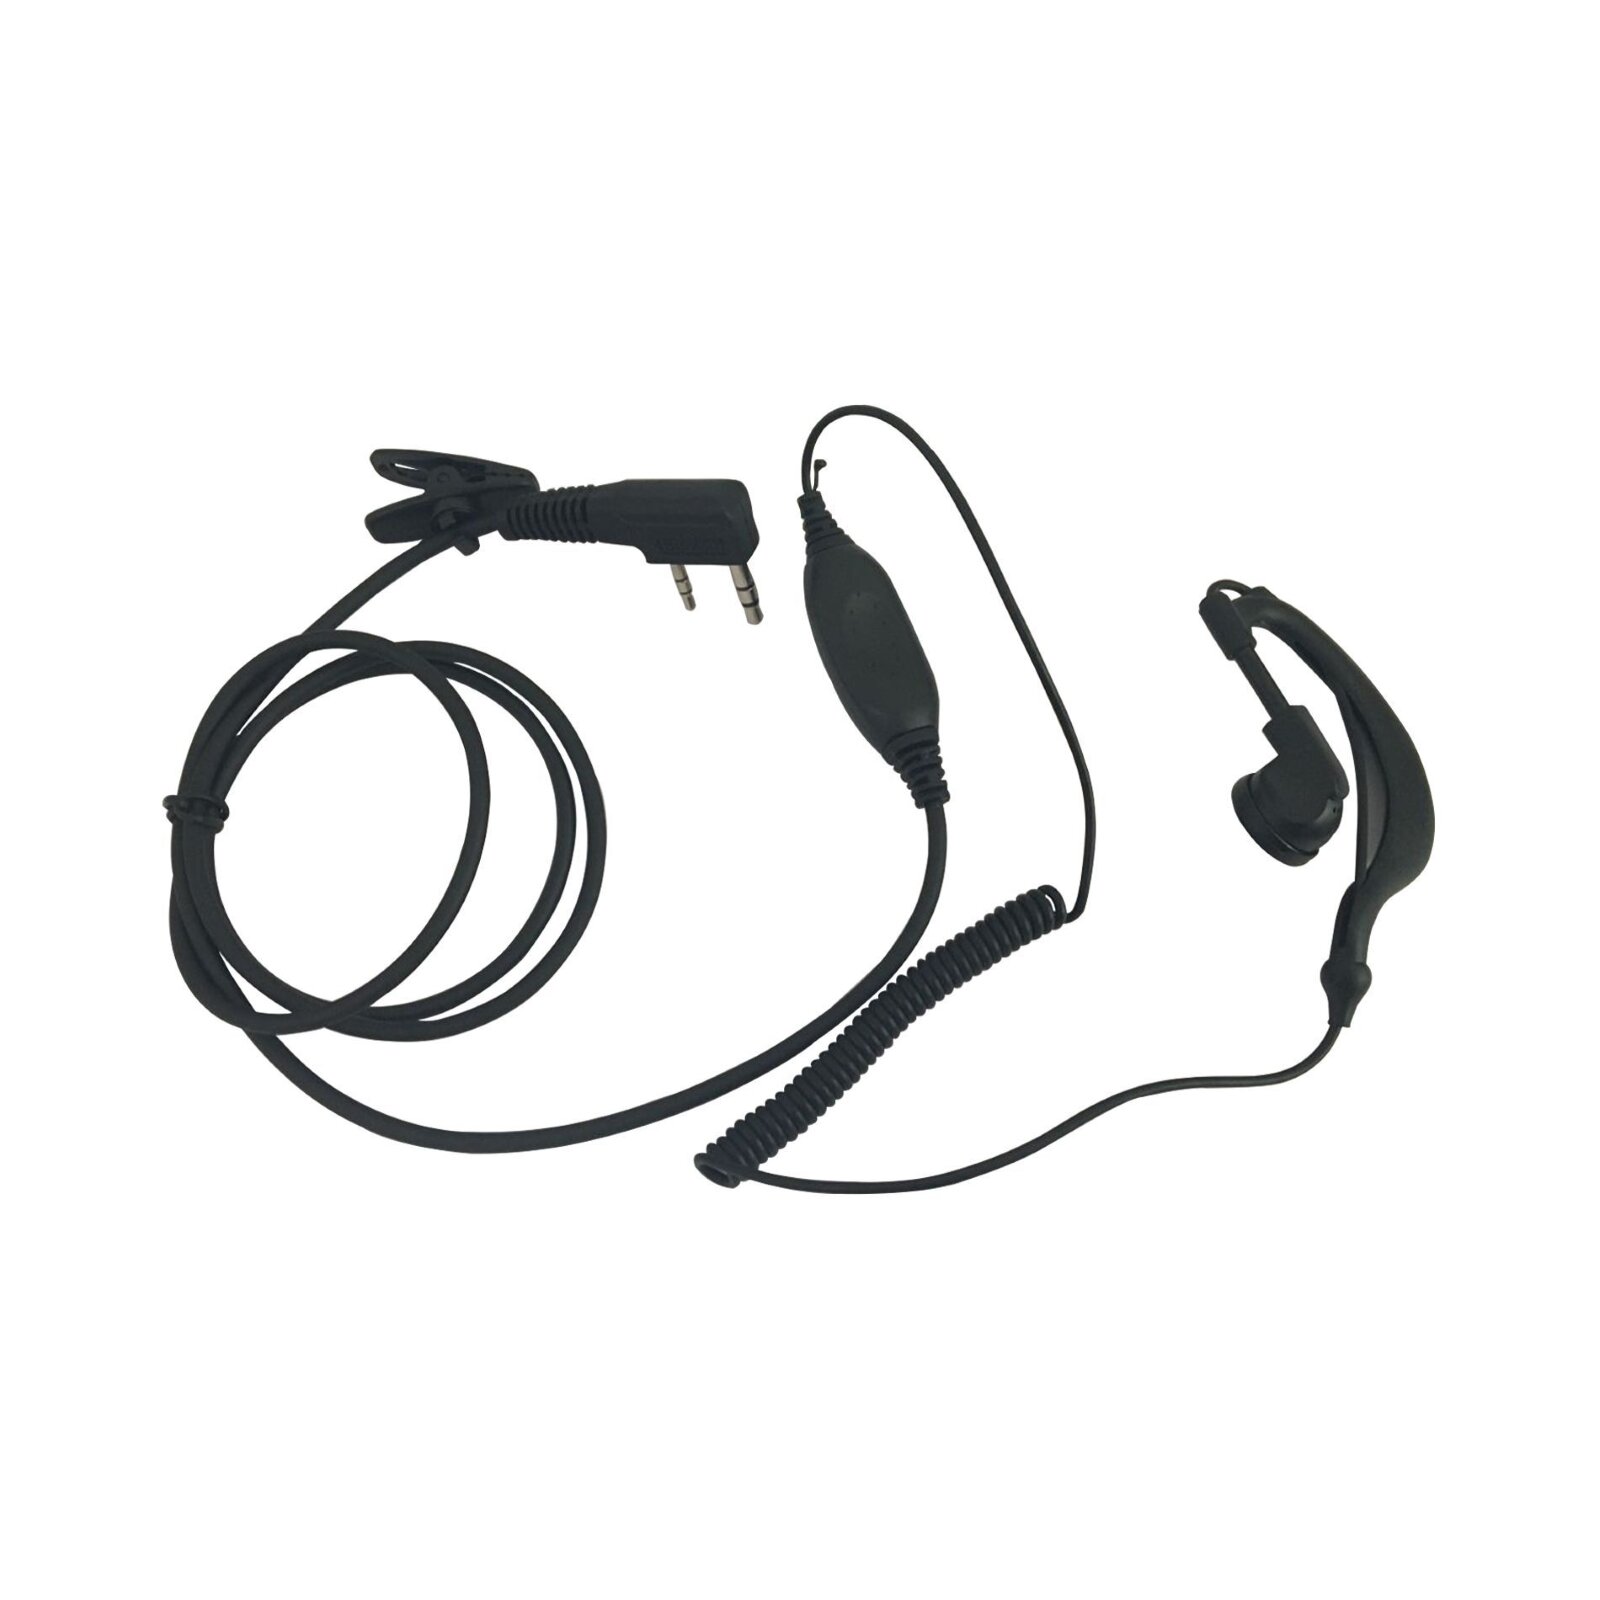 Power Acoustics In-Ear Headphone for Walkie Talkie (HS 06) : photo 1